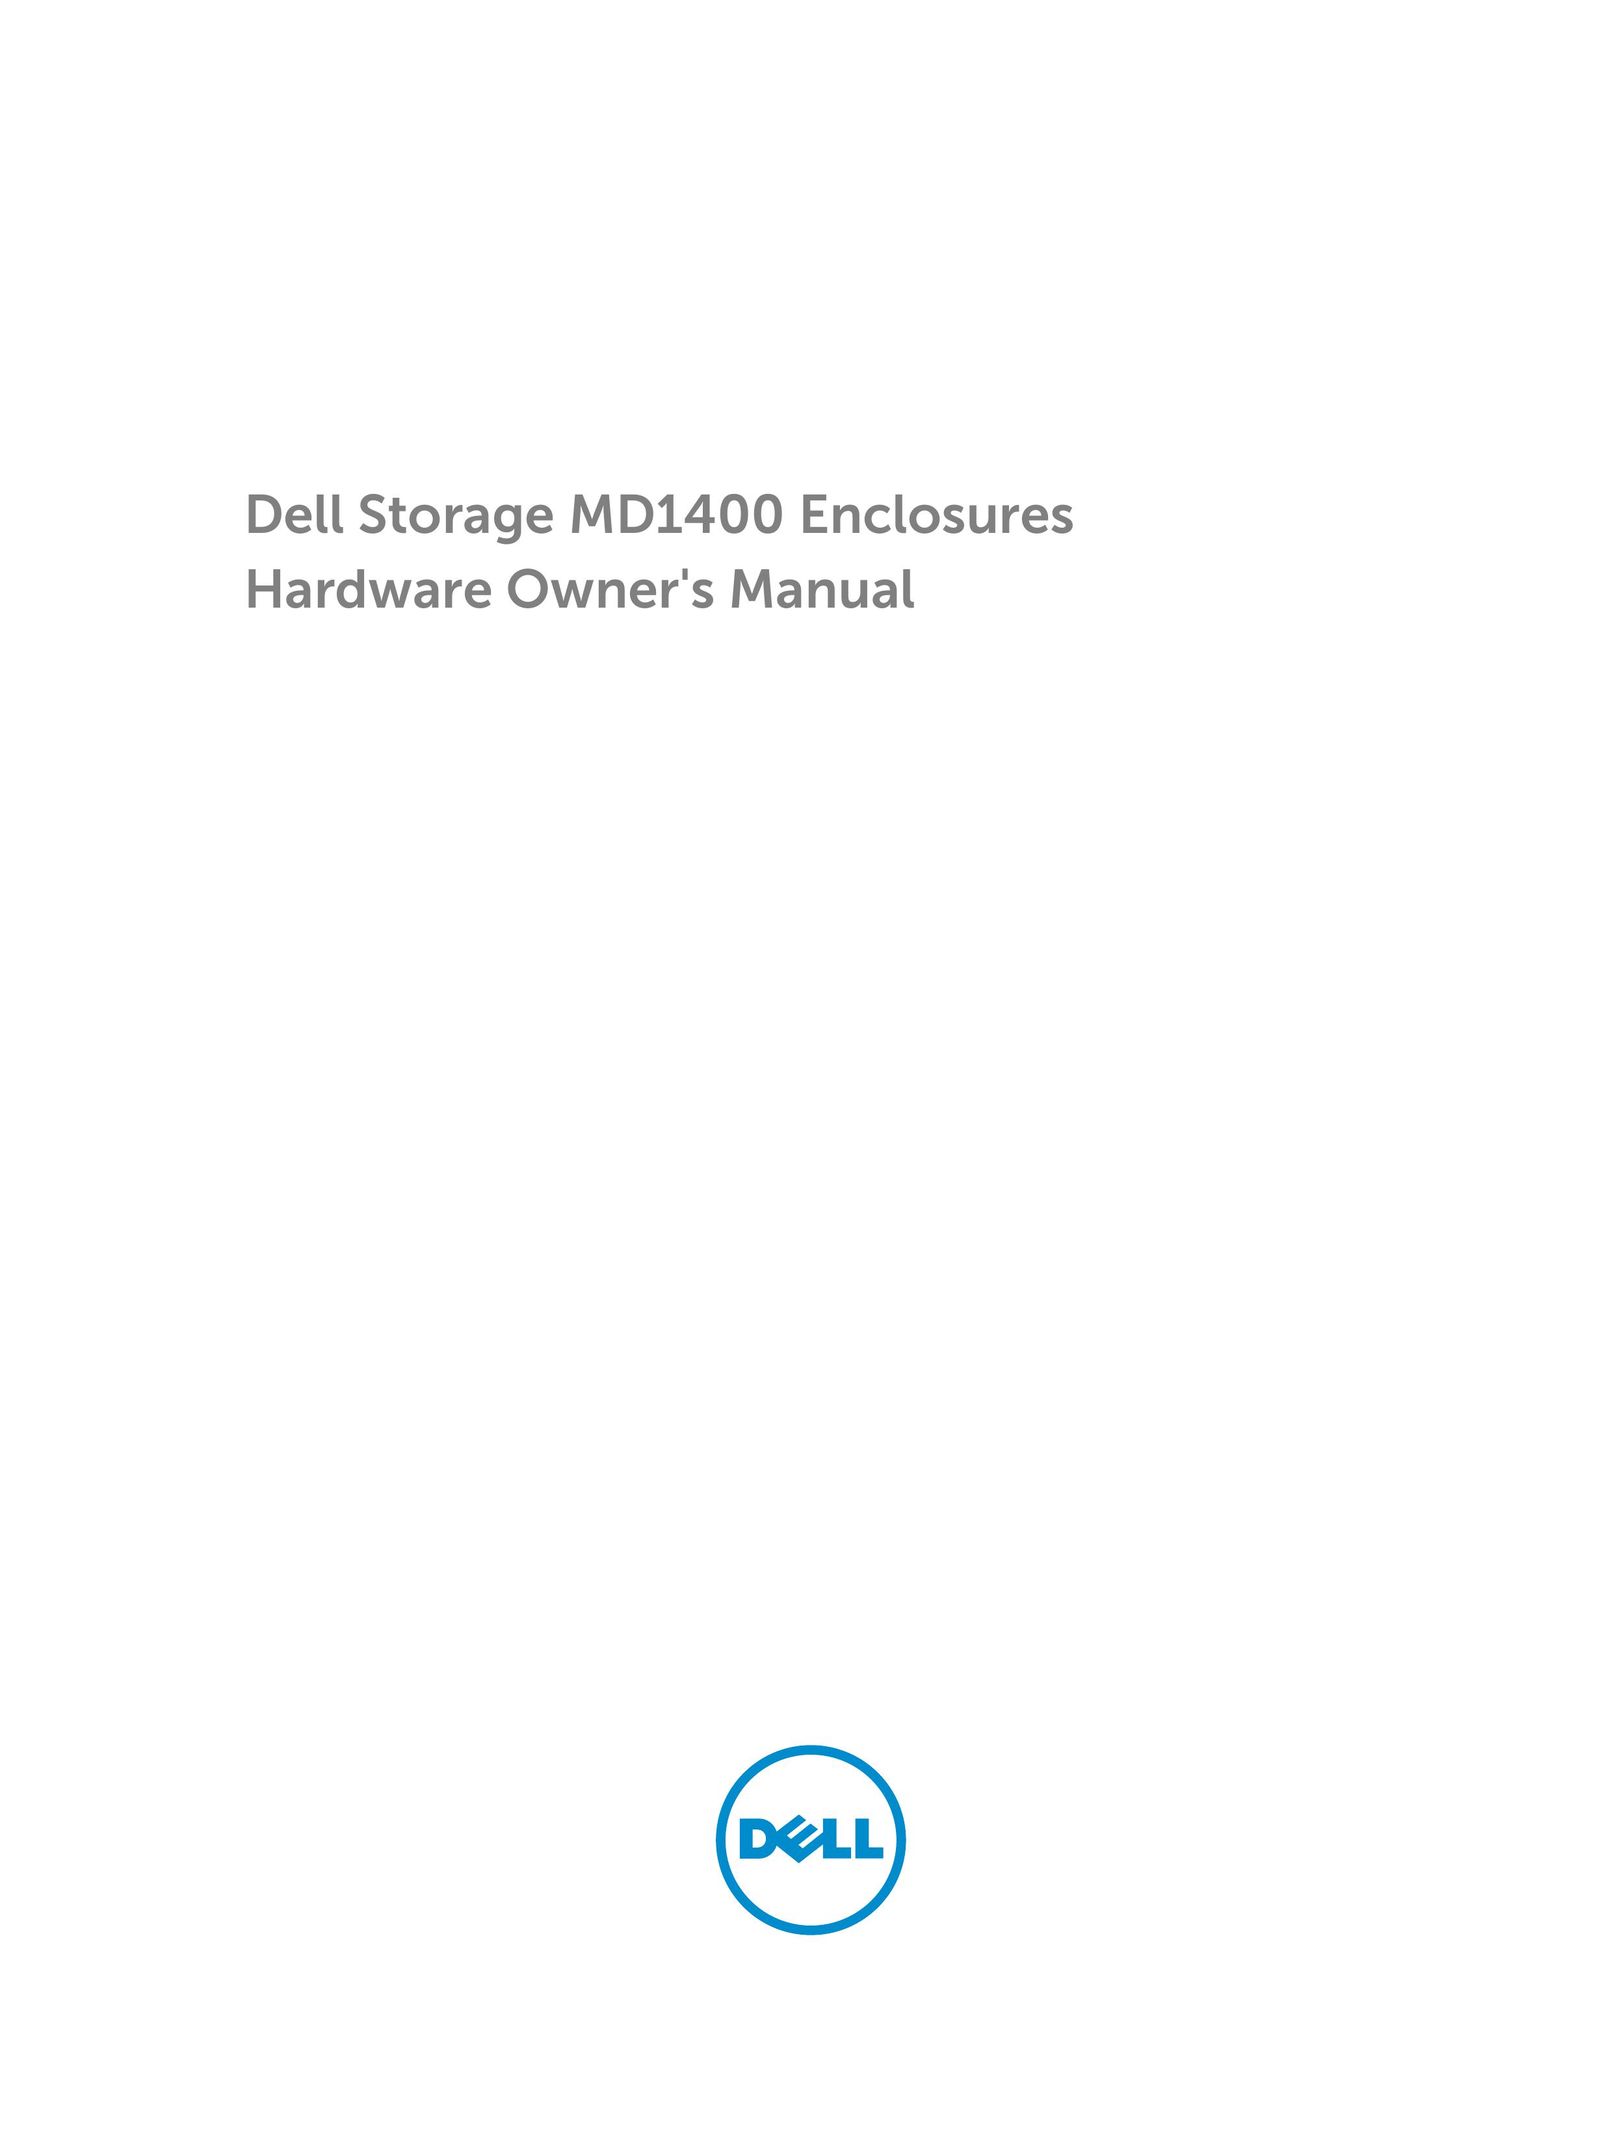 Dell MD1400 TV Mount User Manual